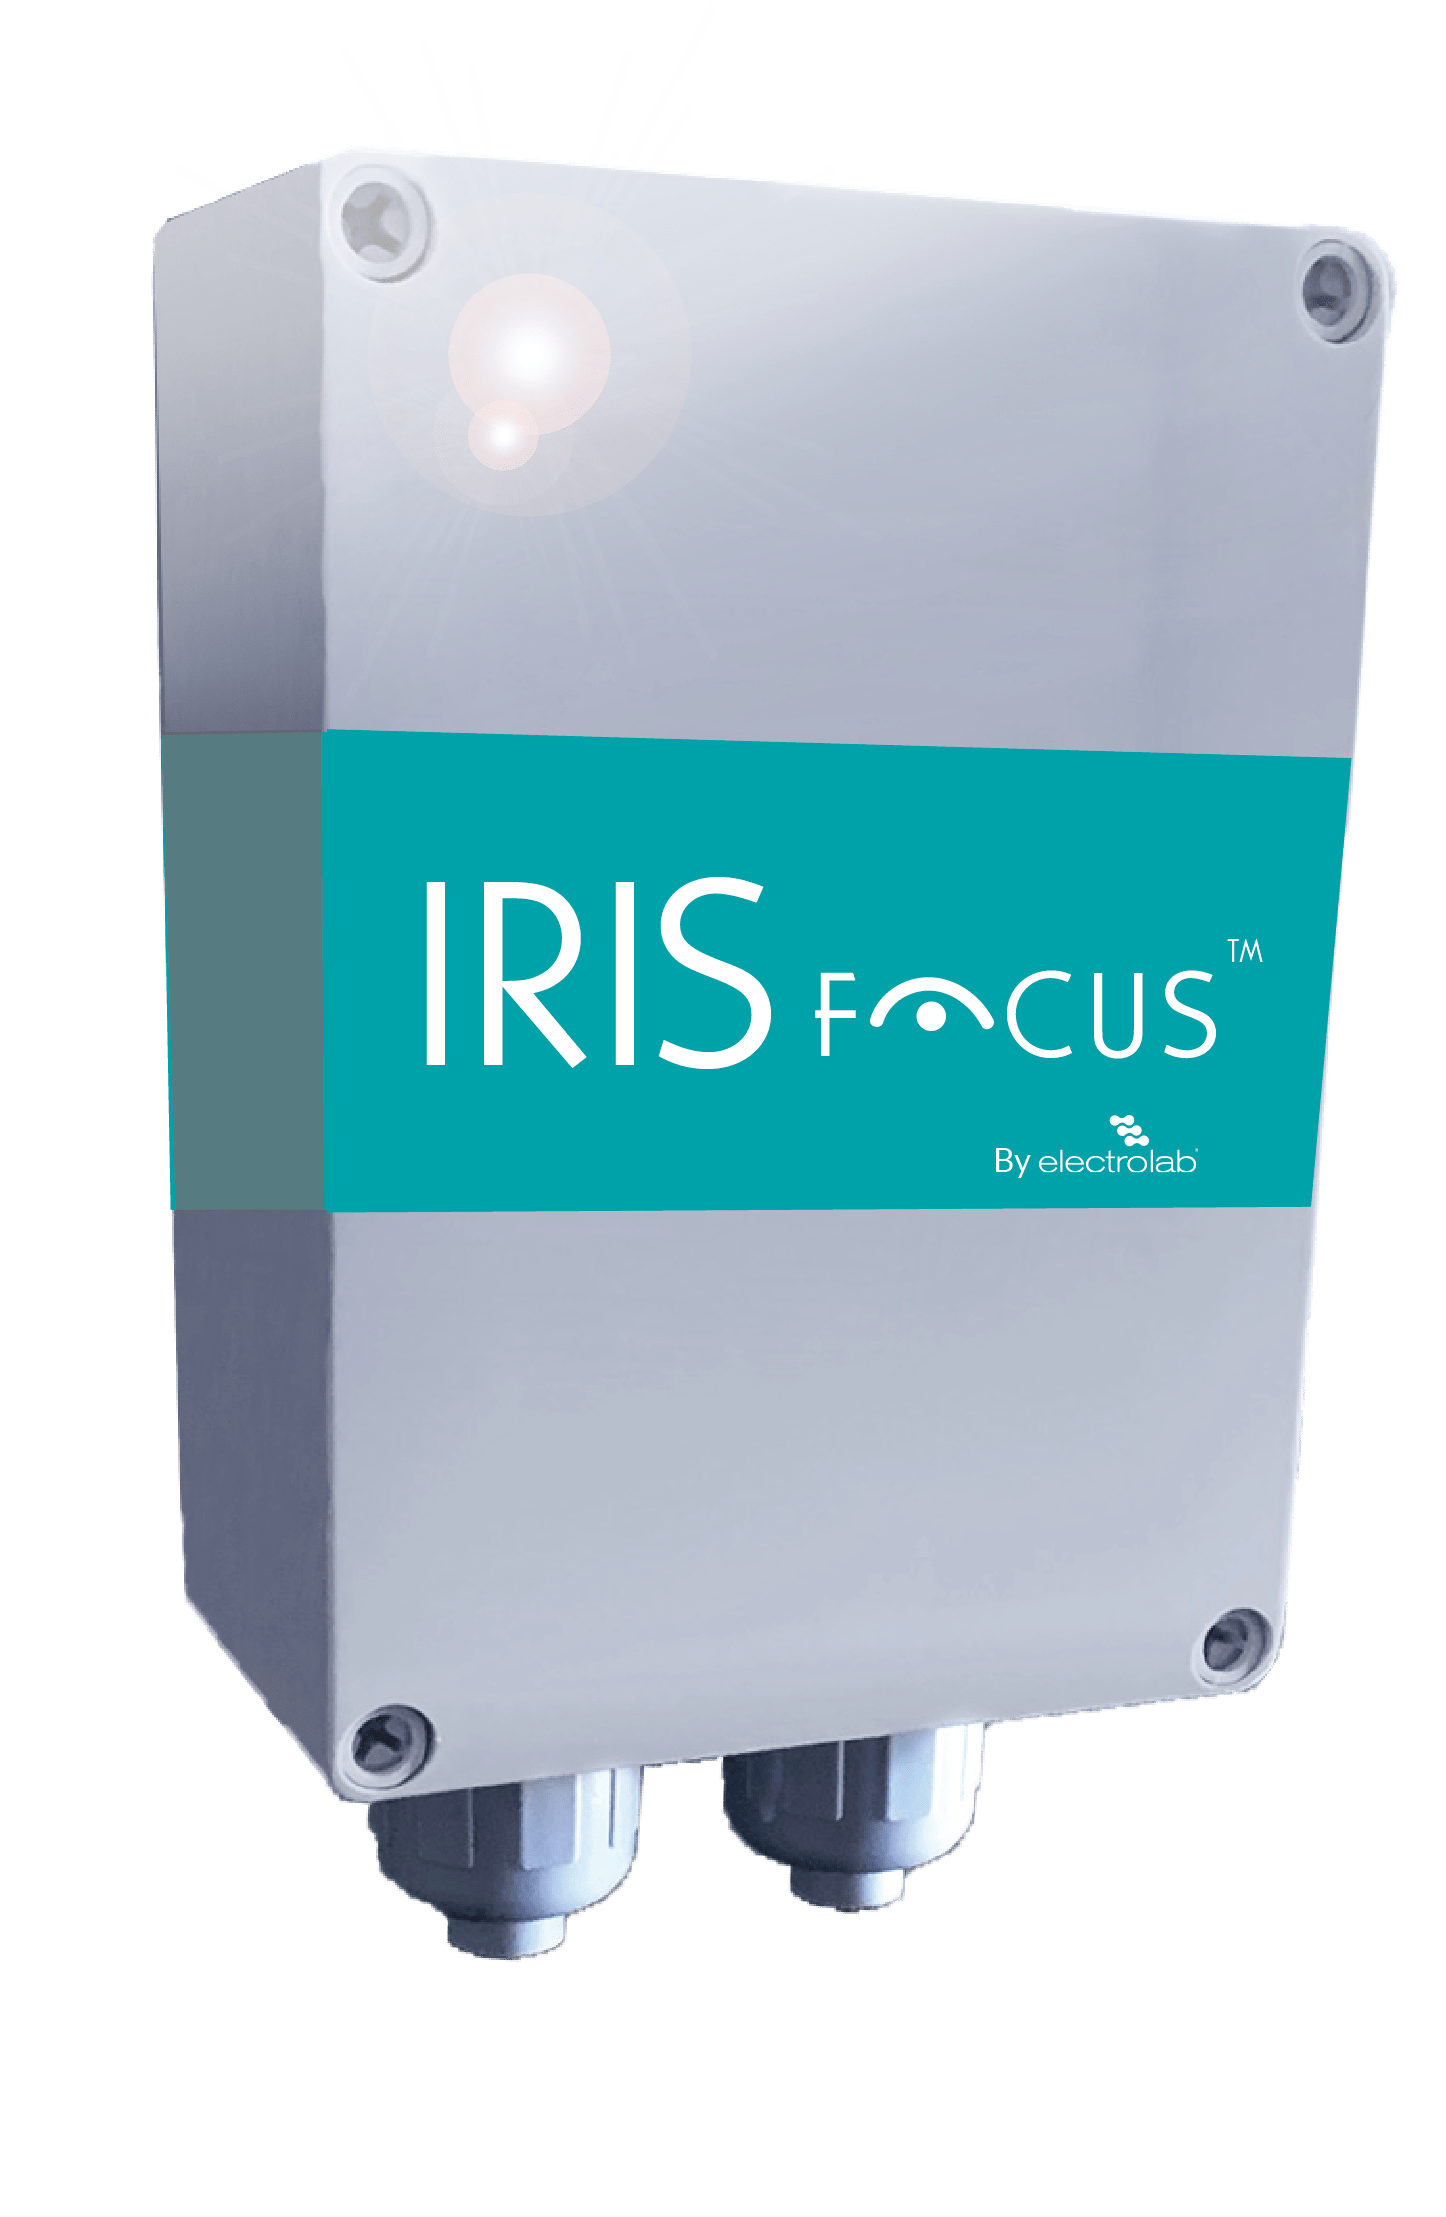 IRIS FOCUS - POWER MONITORING & CONTROL